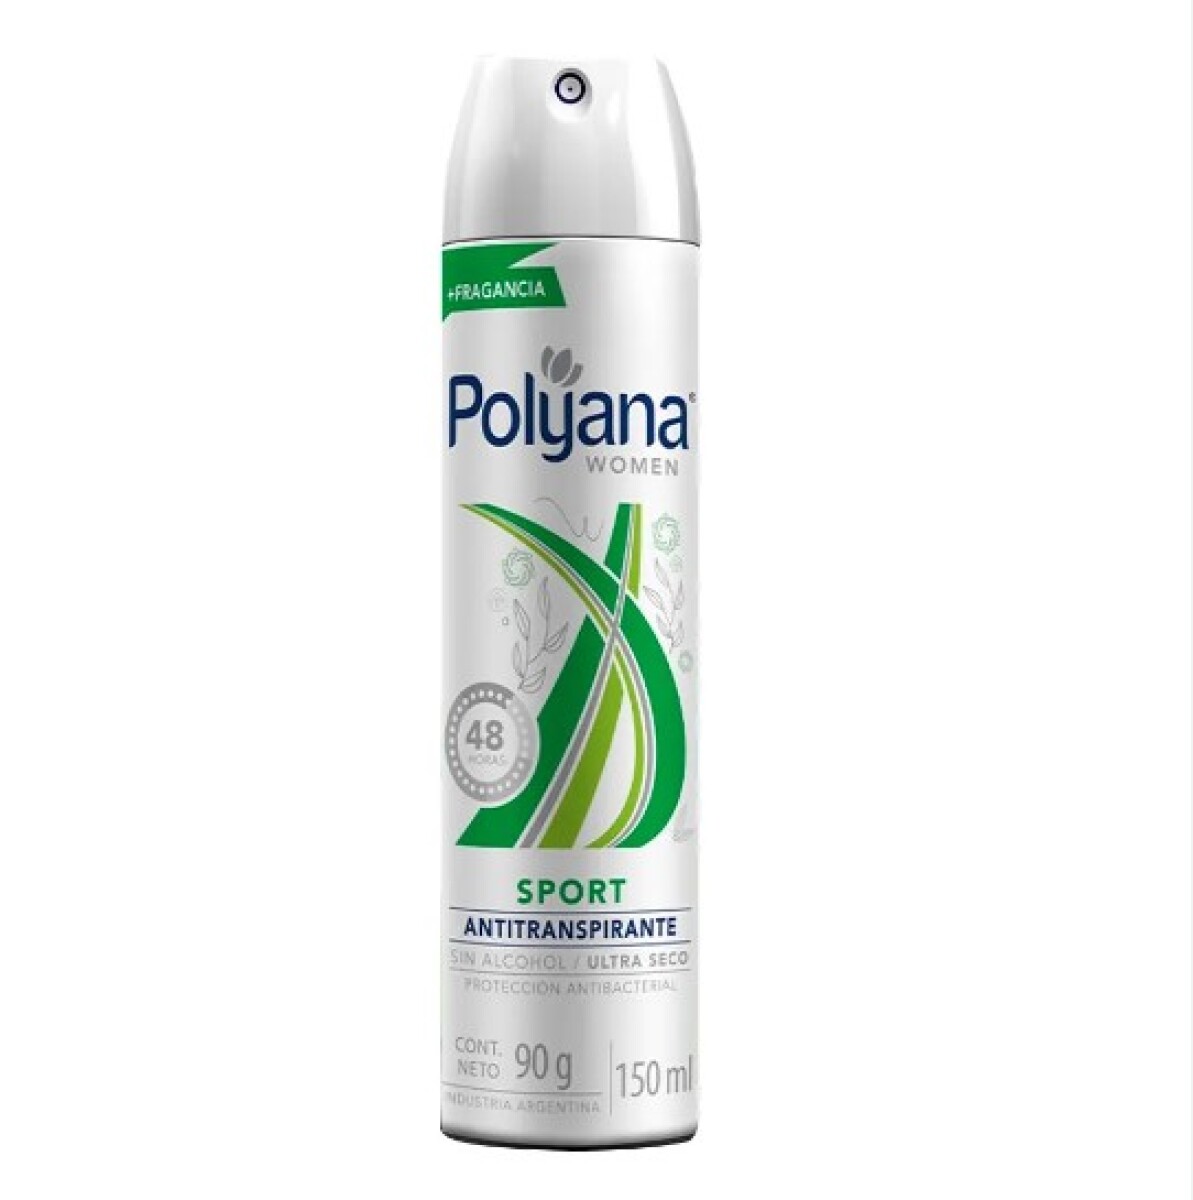 Polyana Antitranspirante aerosol 172 ml - Sport woman 